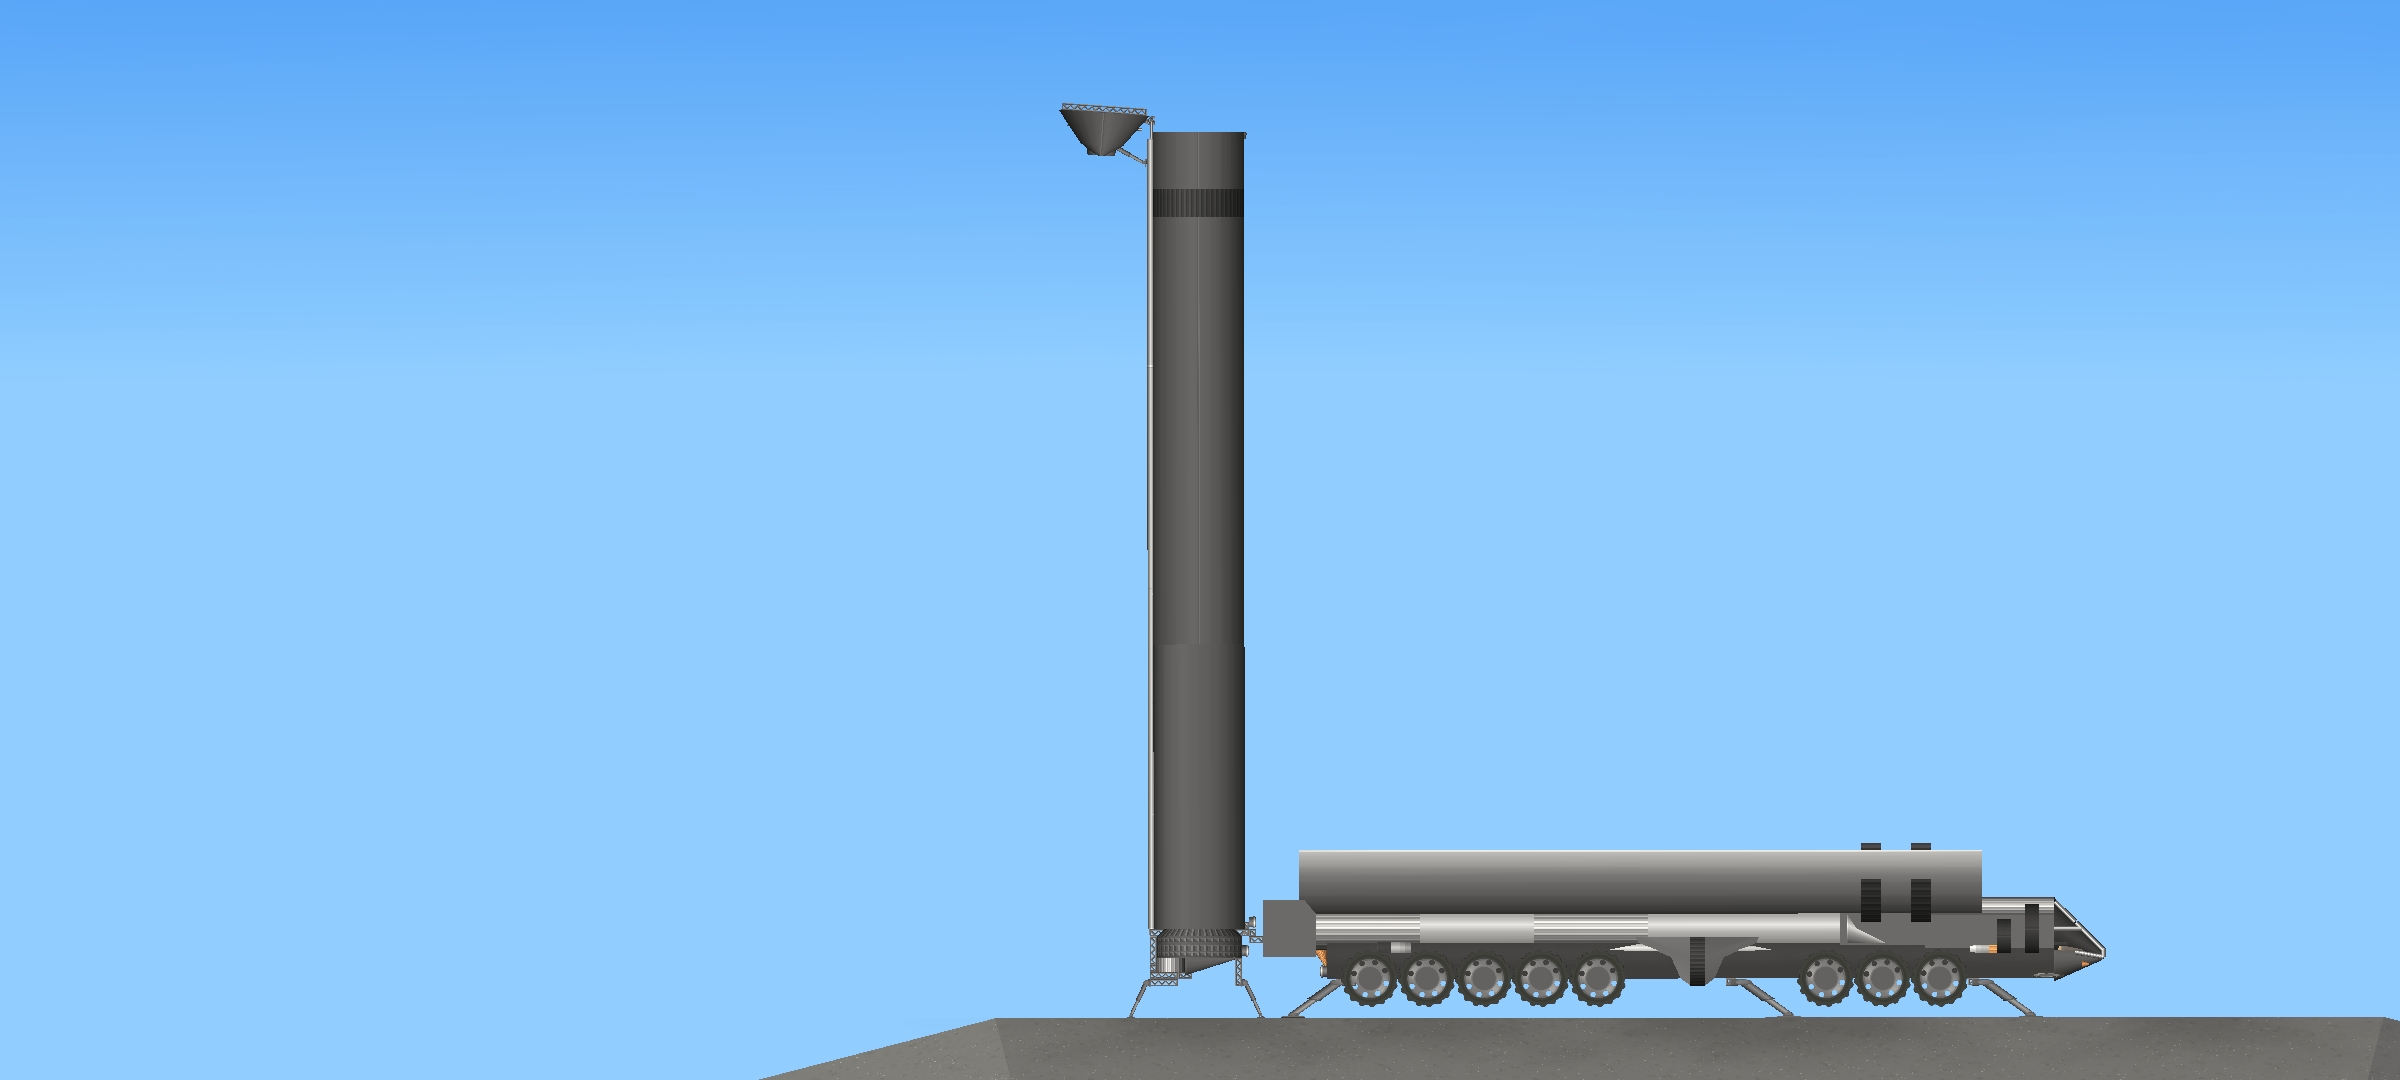 Missile launcher Blueprint for Spaceflight Simulator